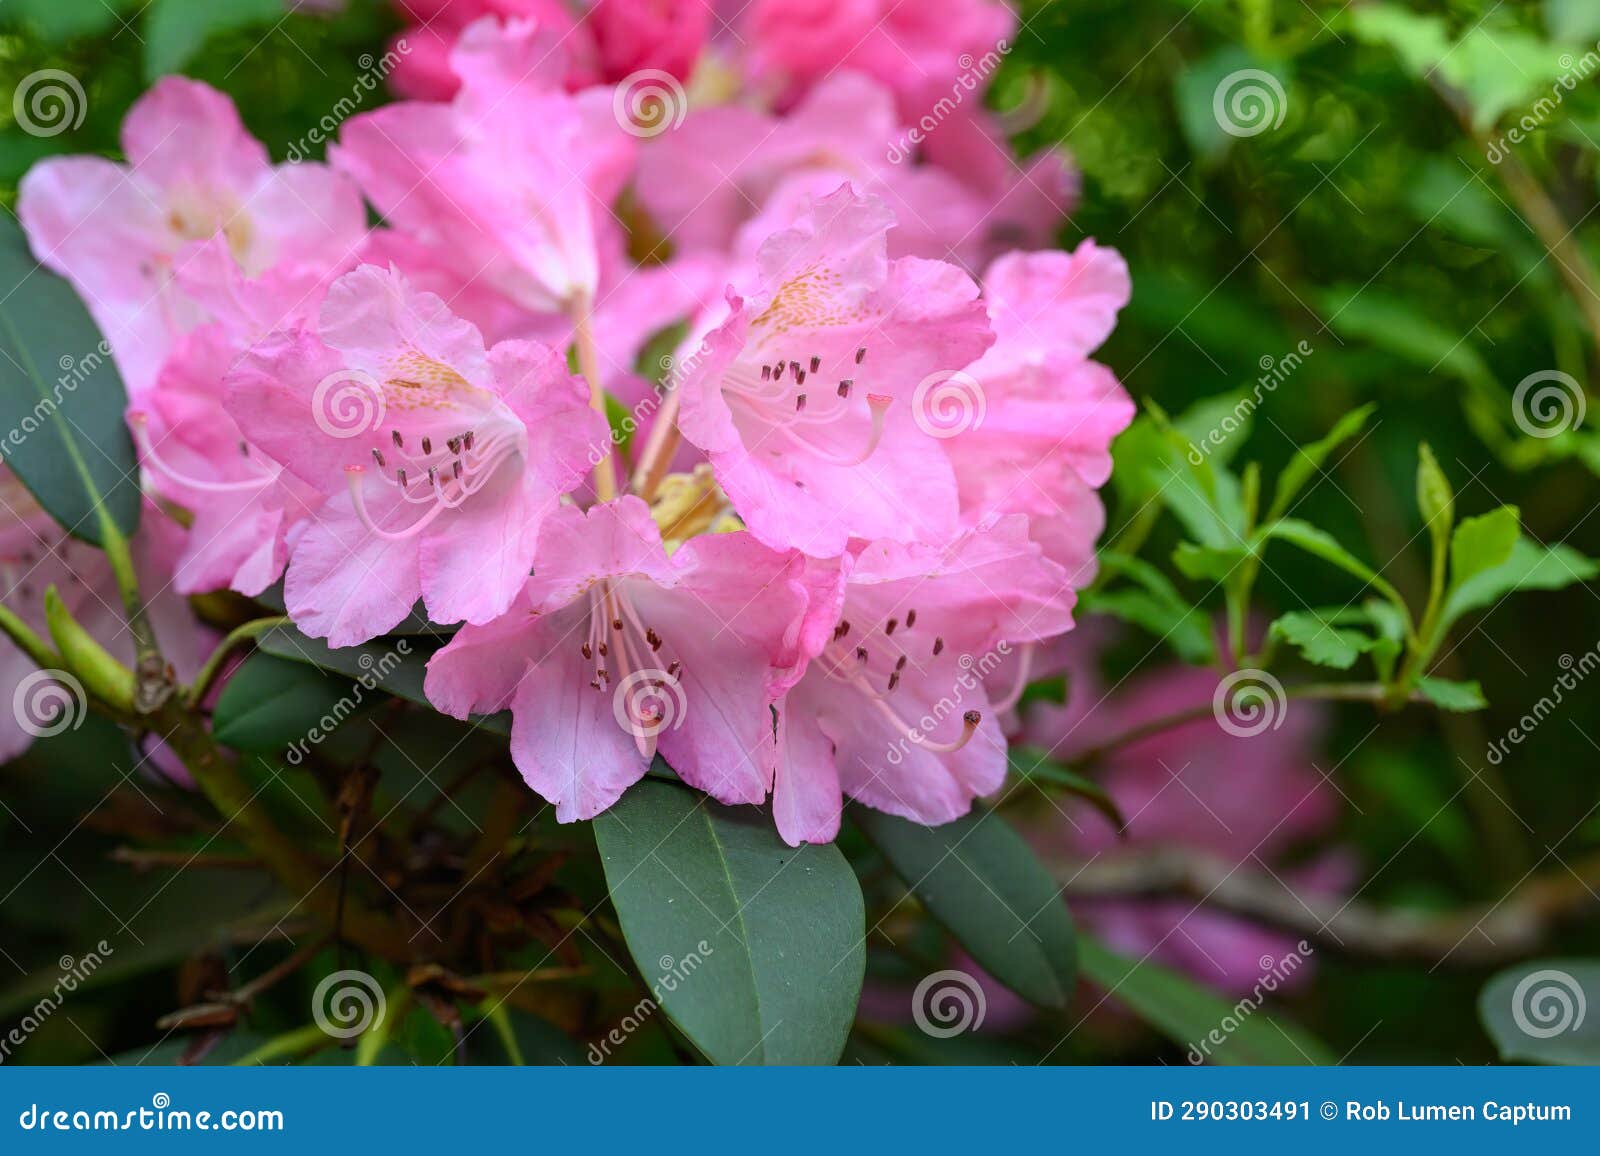 rhododendron yakushimanum emden, pink flowers